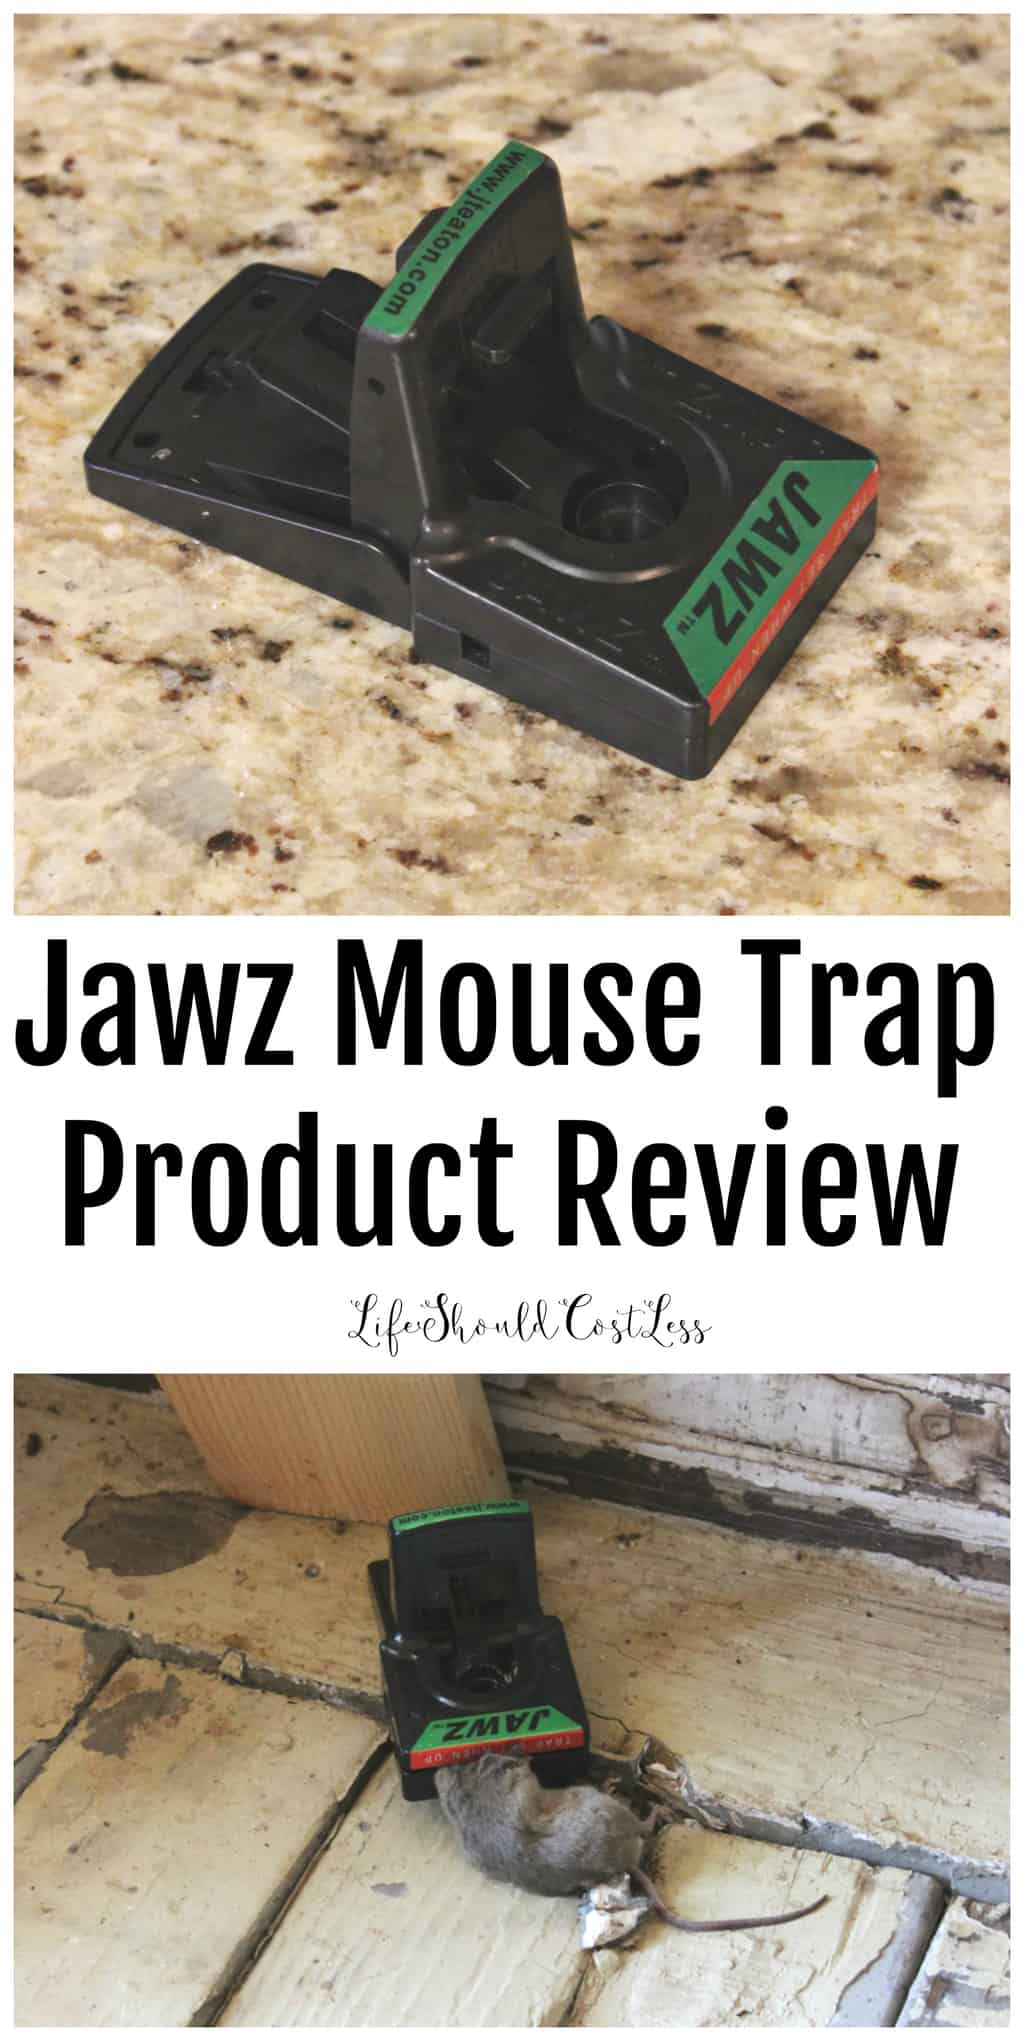 https://lifeshouldcostless.com/wp-content/uploads/2018/09/Jawzjaws-Mouse-Trap-Product-Review.-lifeshouldcostless.com_.jpg